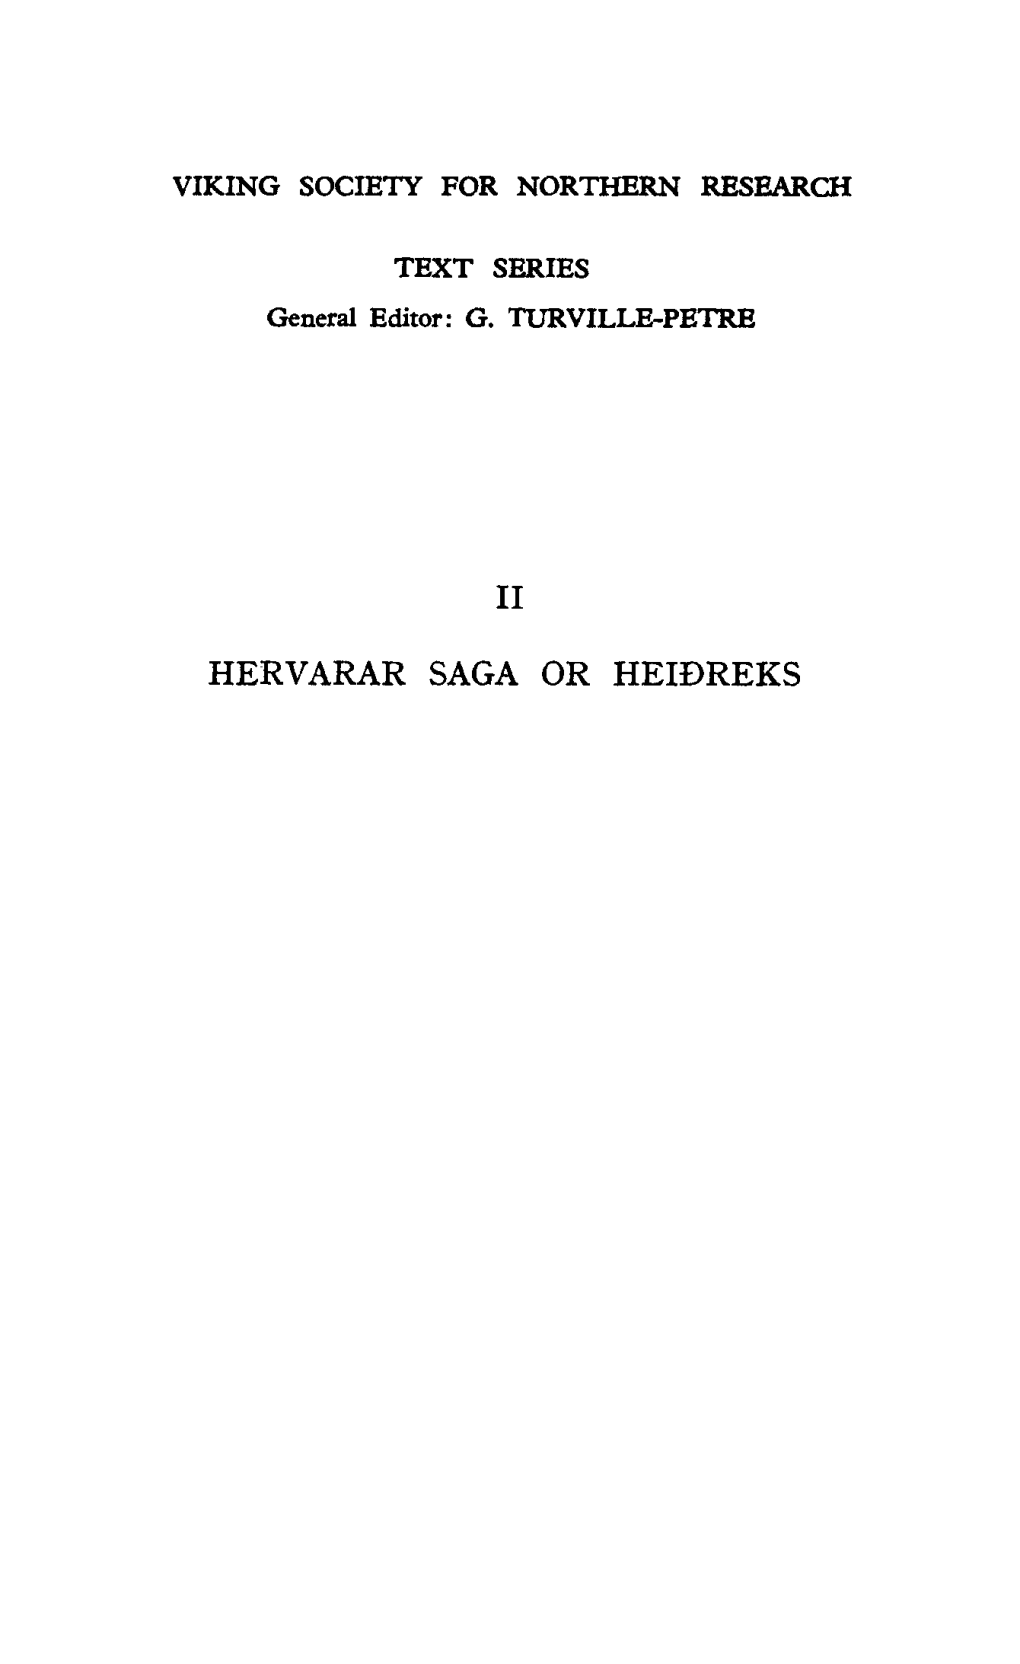 Hervarar Saga Or Heidreks